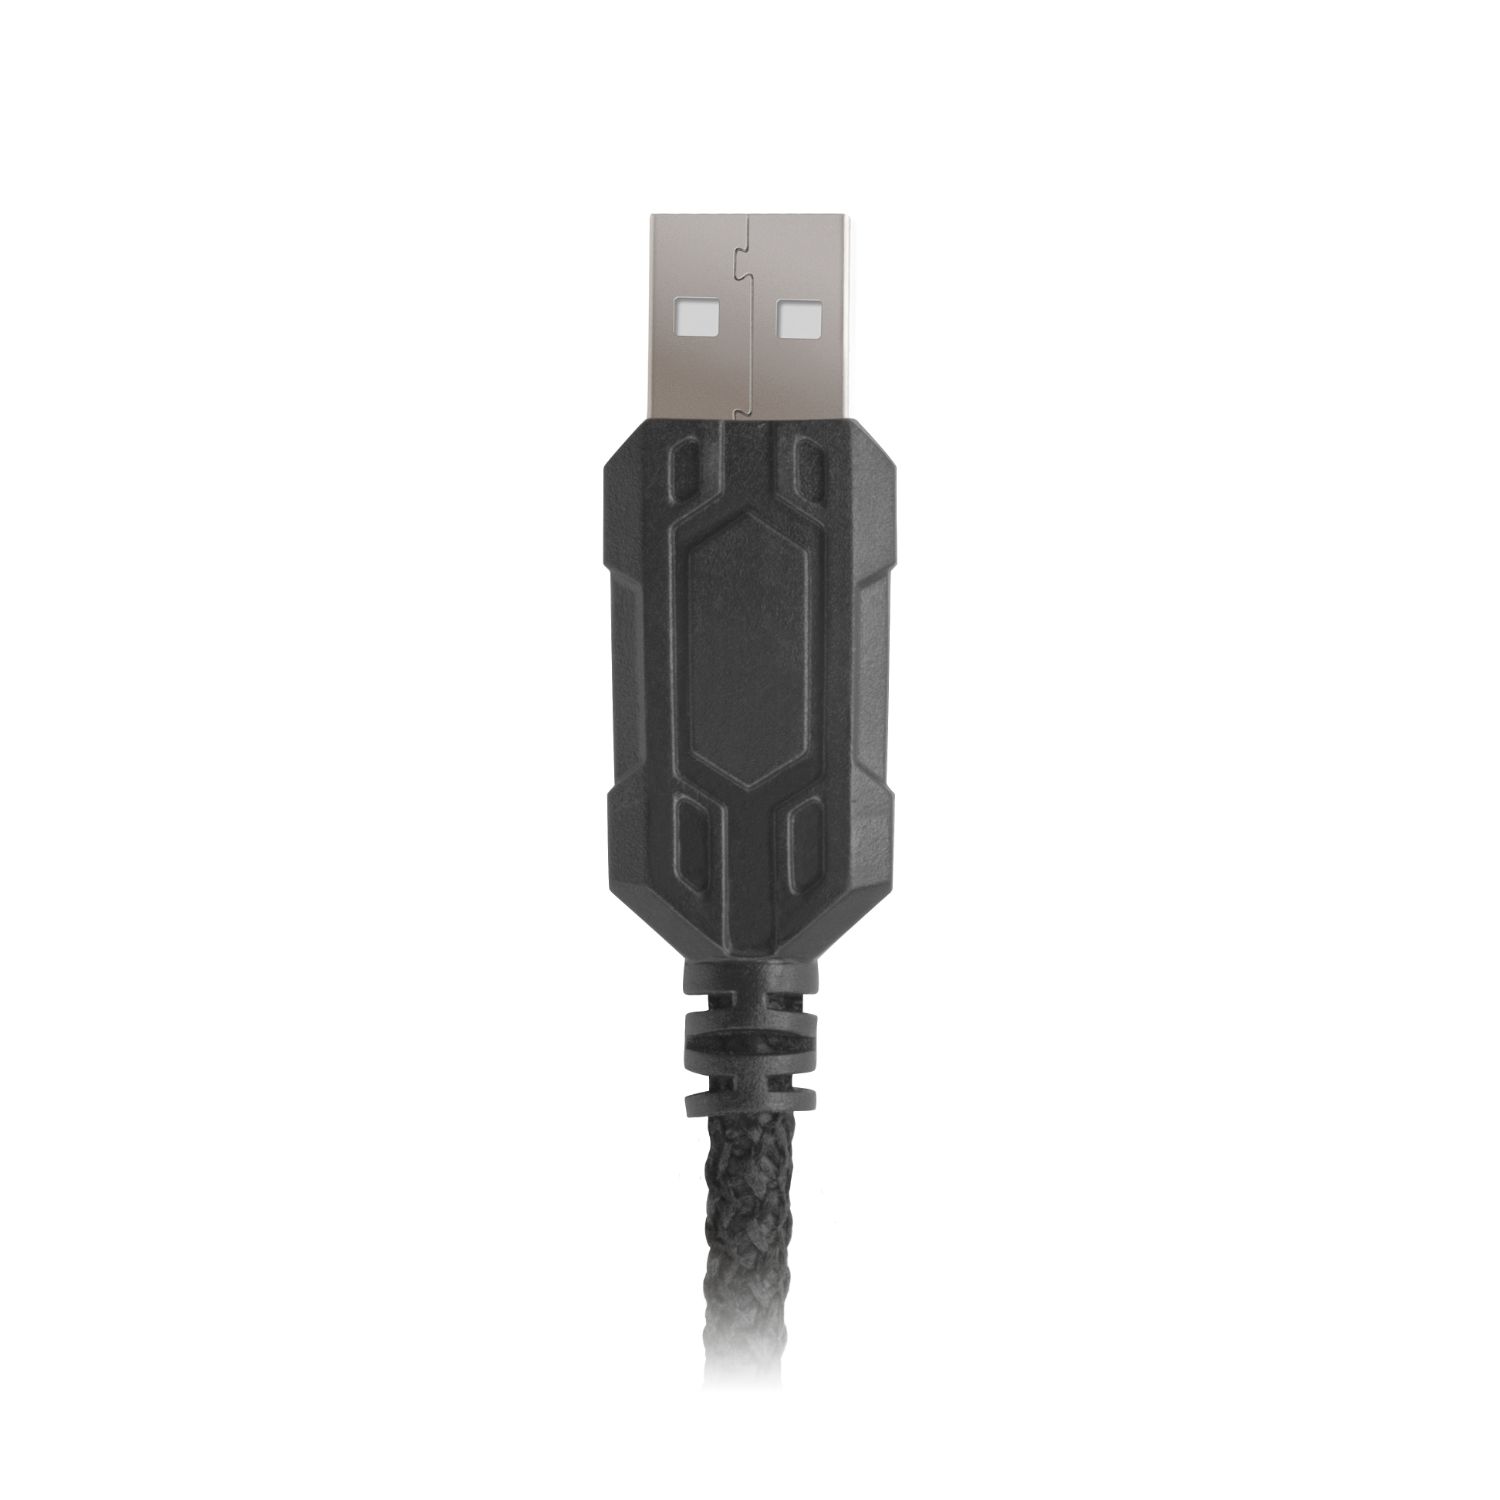 MSC2 - Tarjeta de Sonido Mars Gaming 7.1 Control Multifuncin USB 1.5m Negra (MSC2)